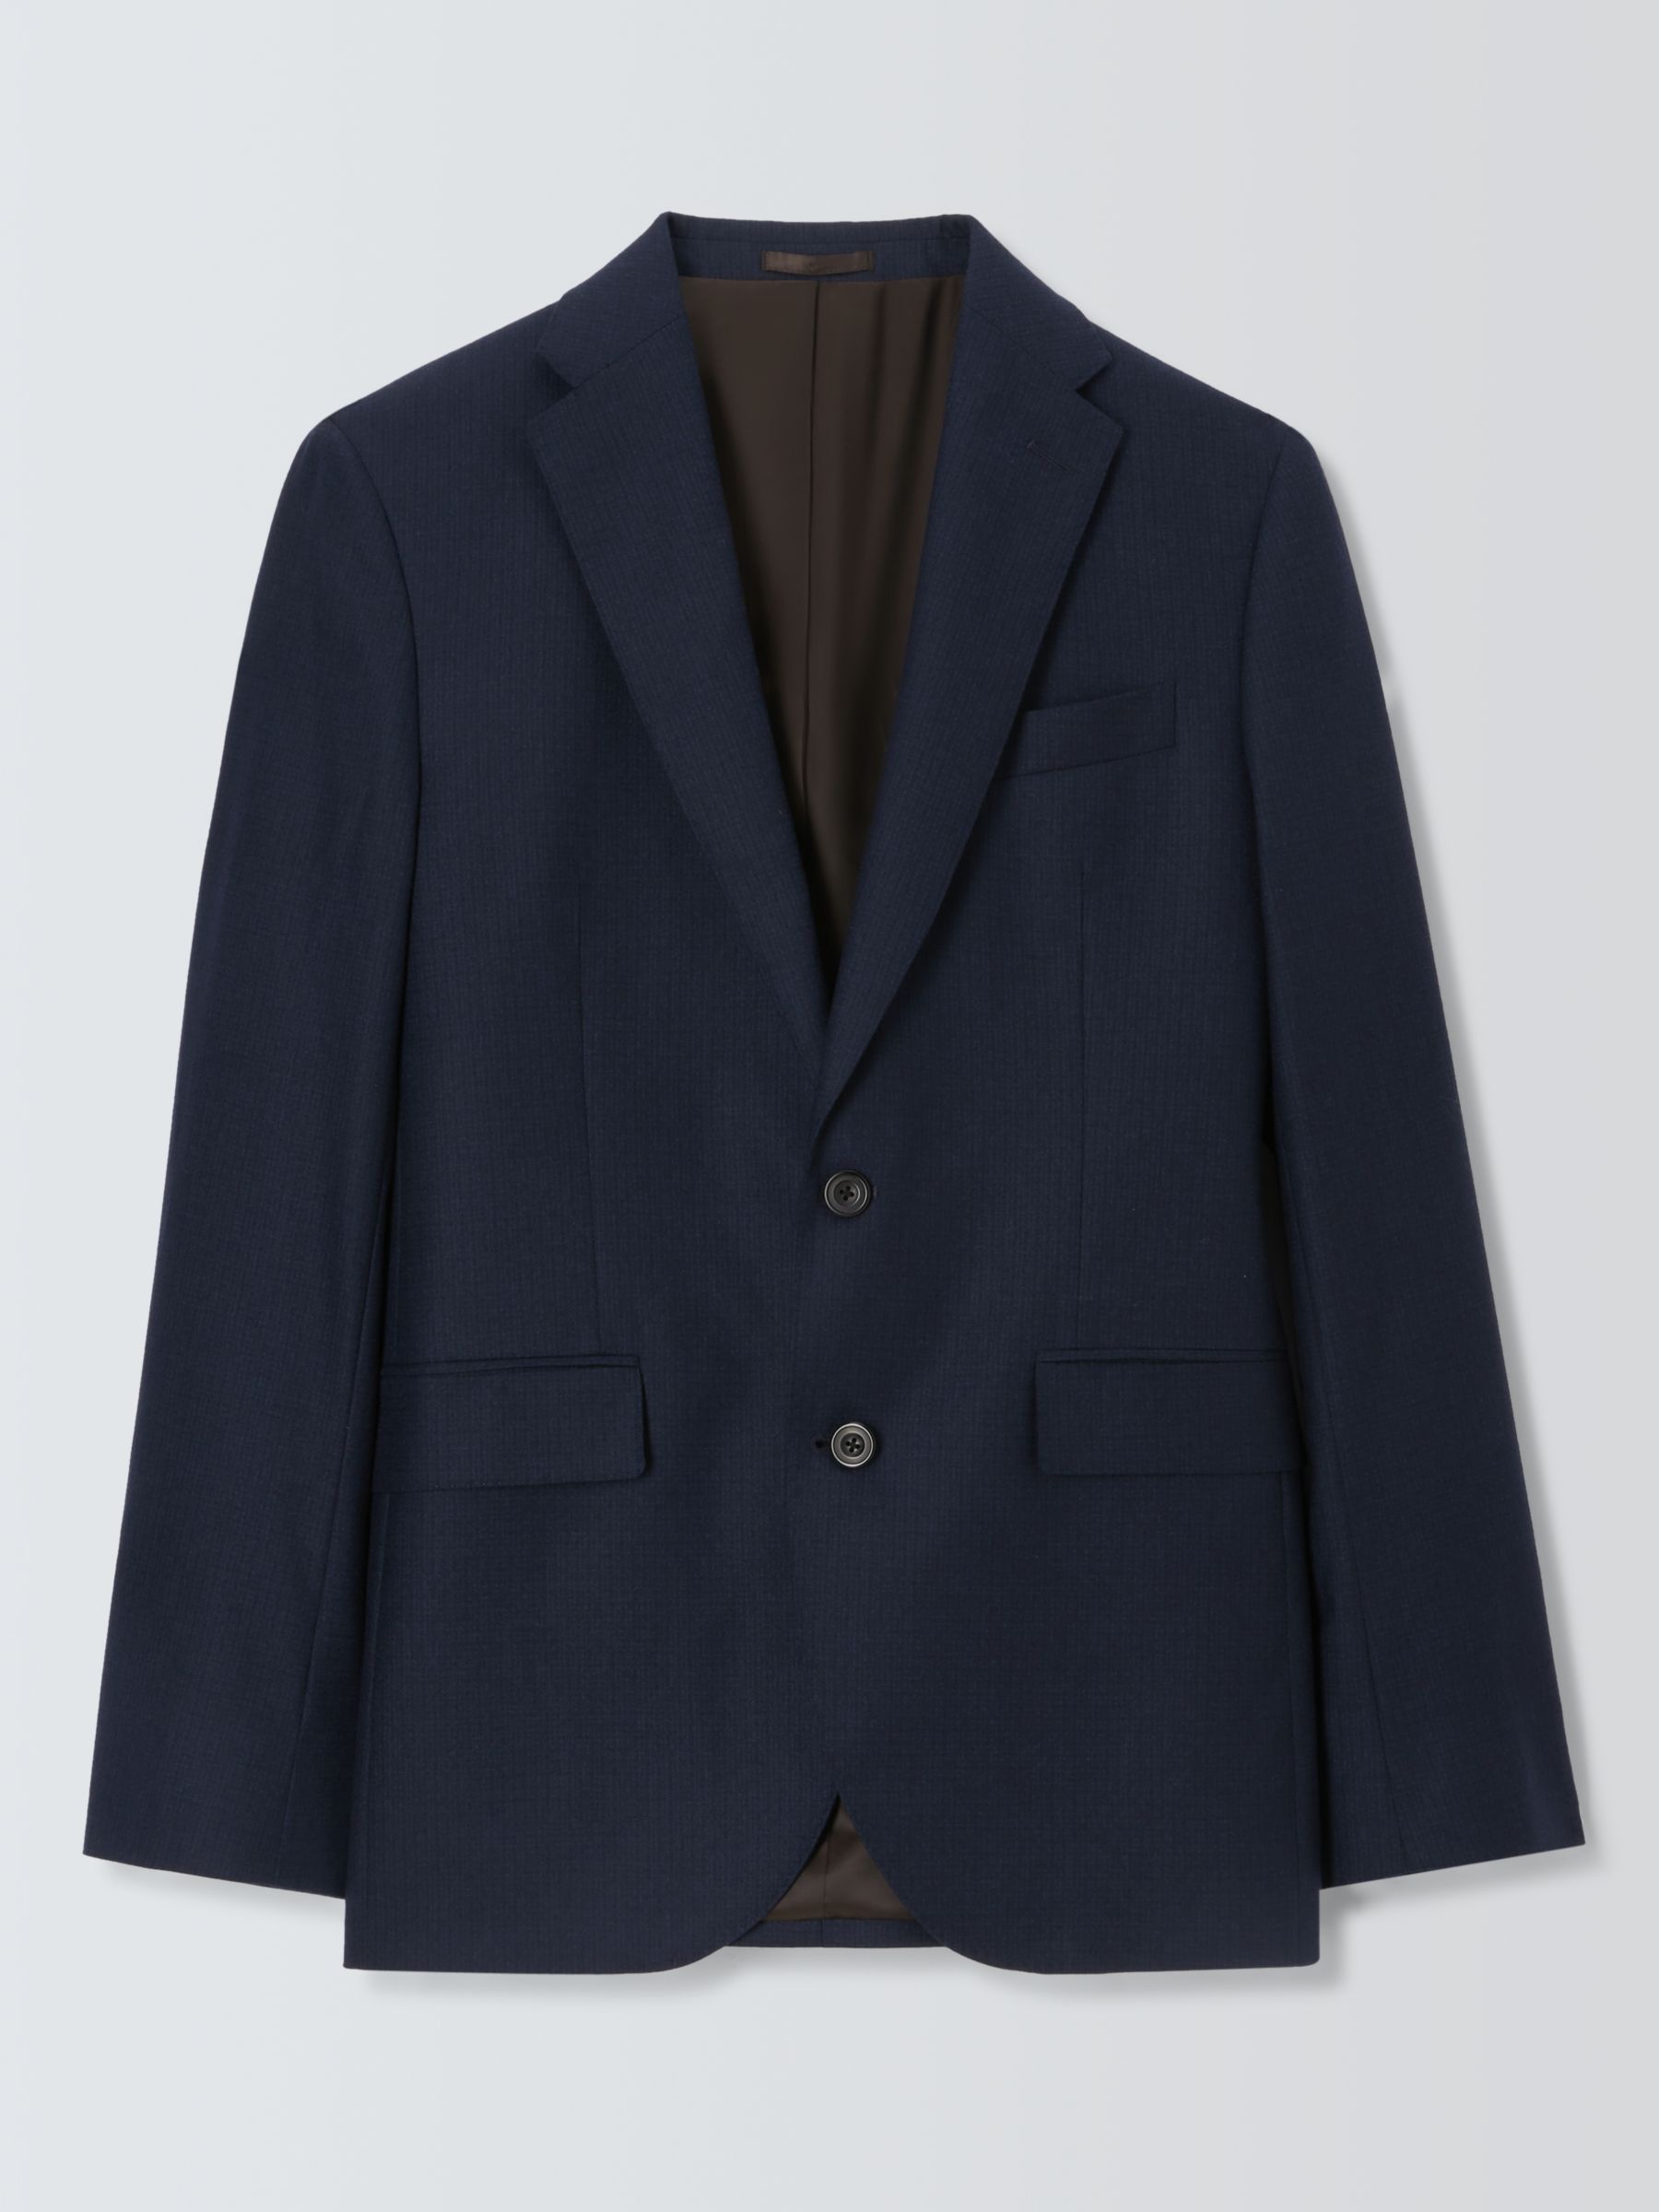 John Lewis Zegna Recycled Wool Regular Fit Suit Jacket, Navy, 38R